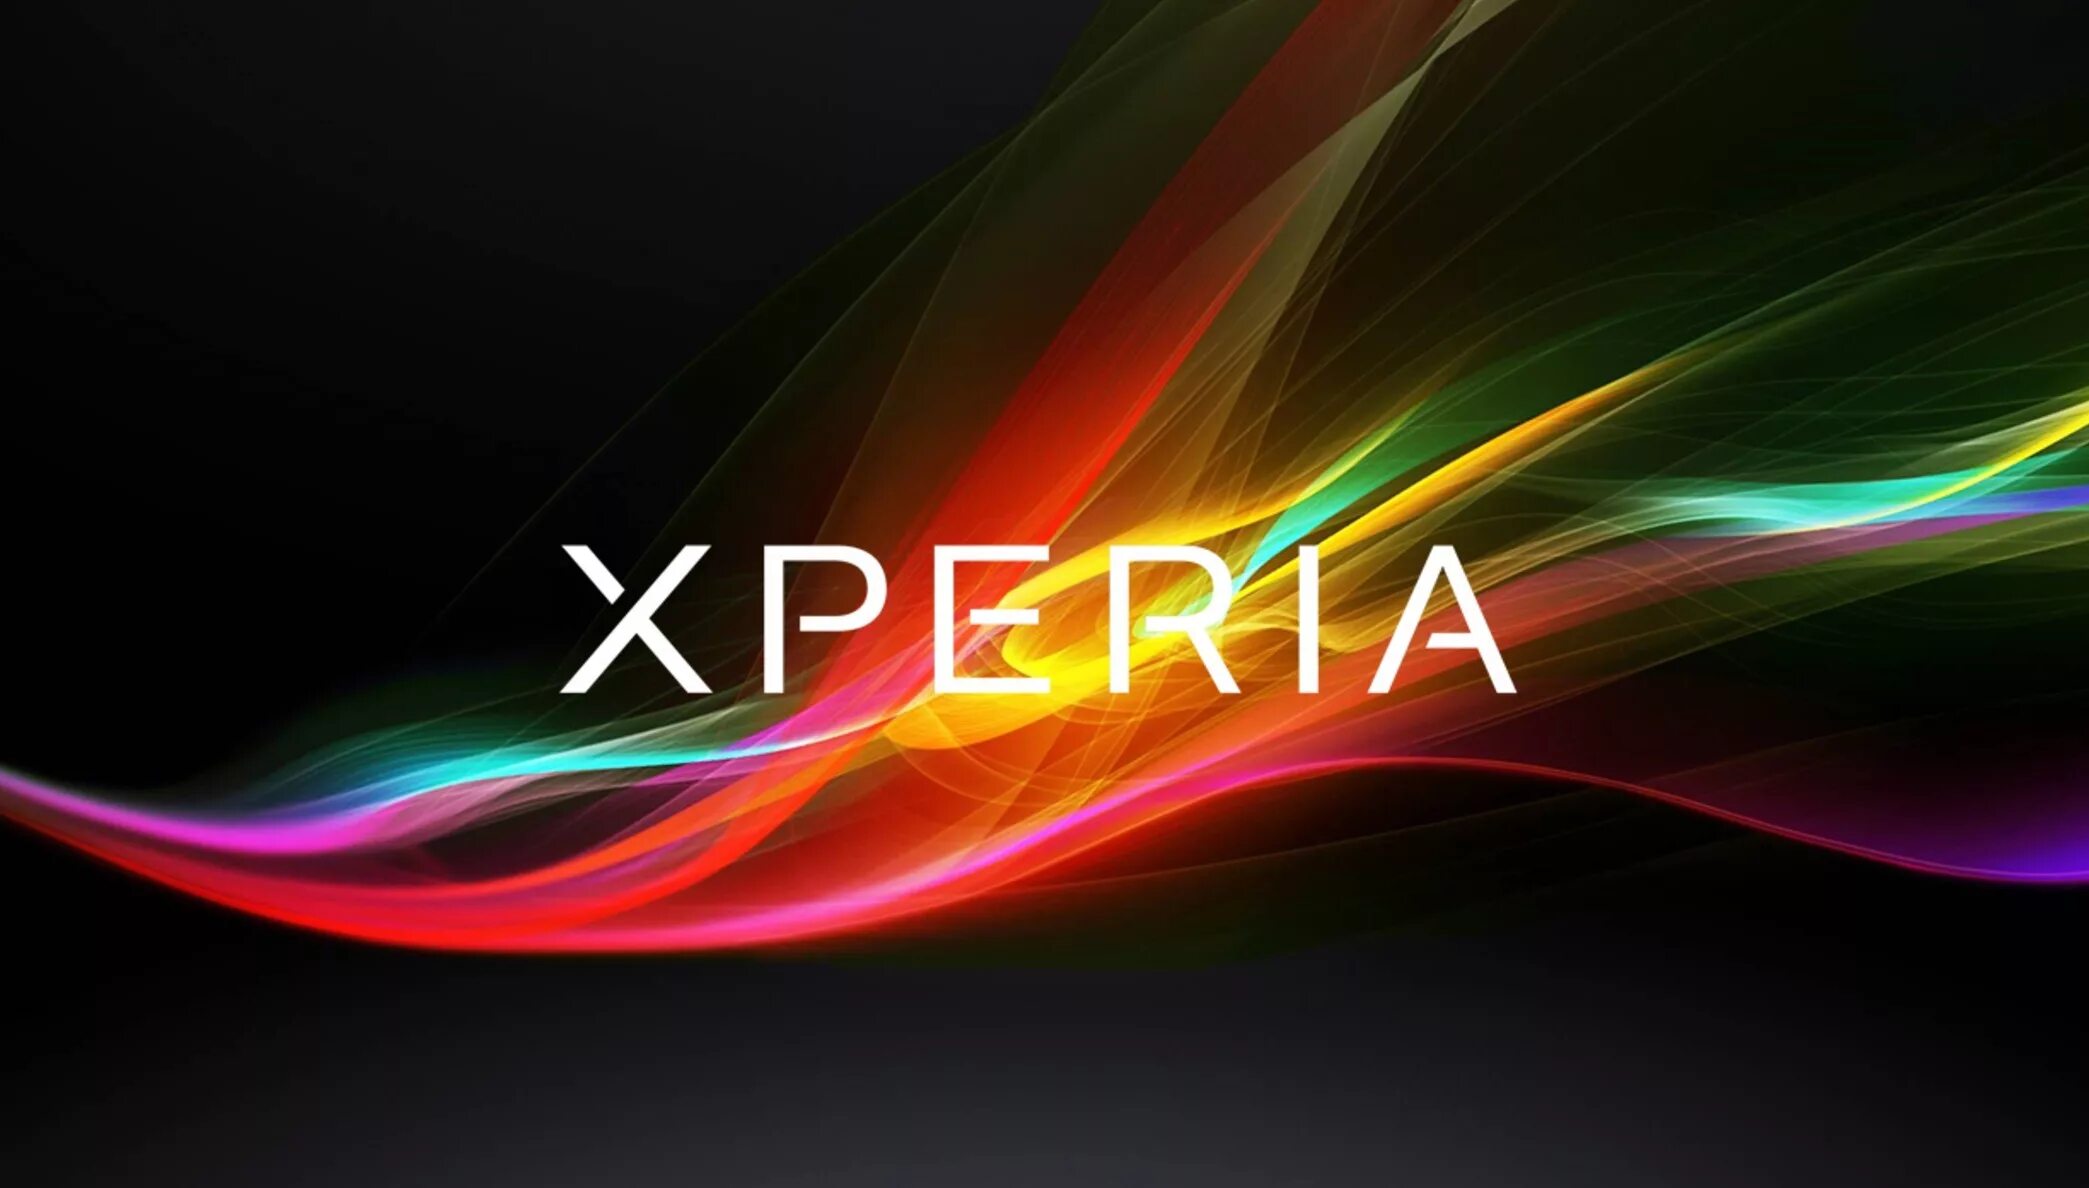 Обои сони. Логотип Sony Xperia. Обои сони Xperia. Фоновые рисунки Sony Xperia.